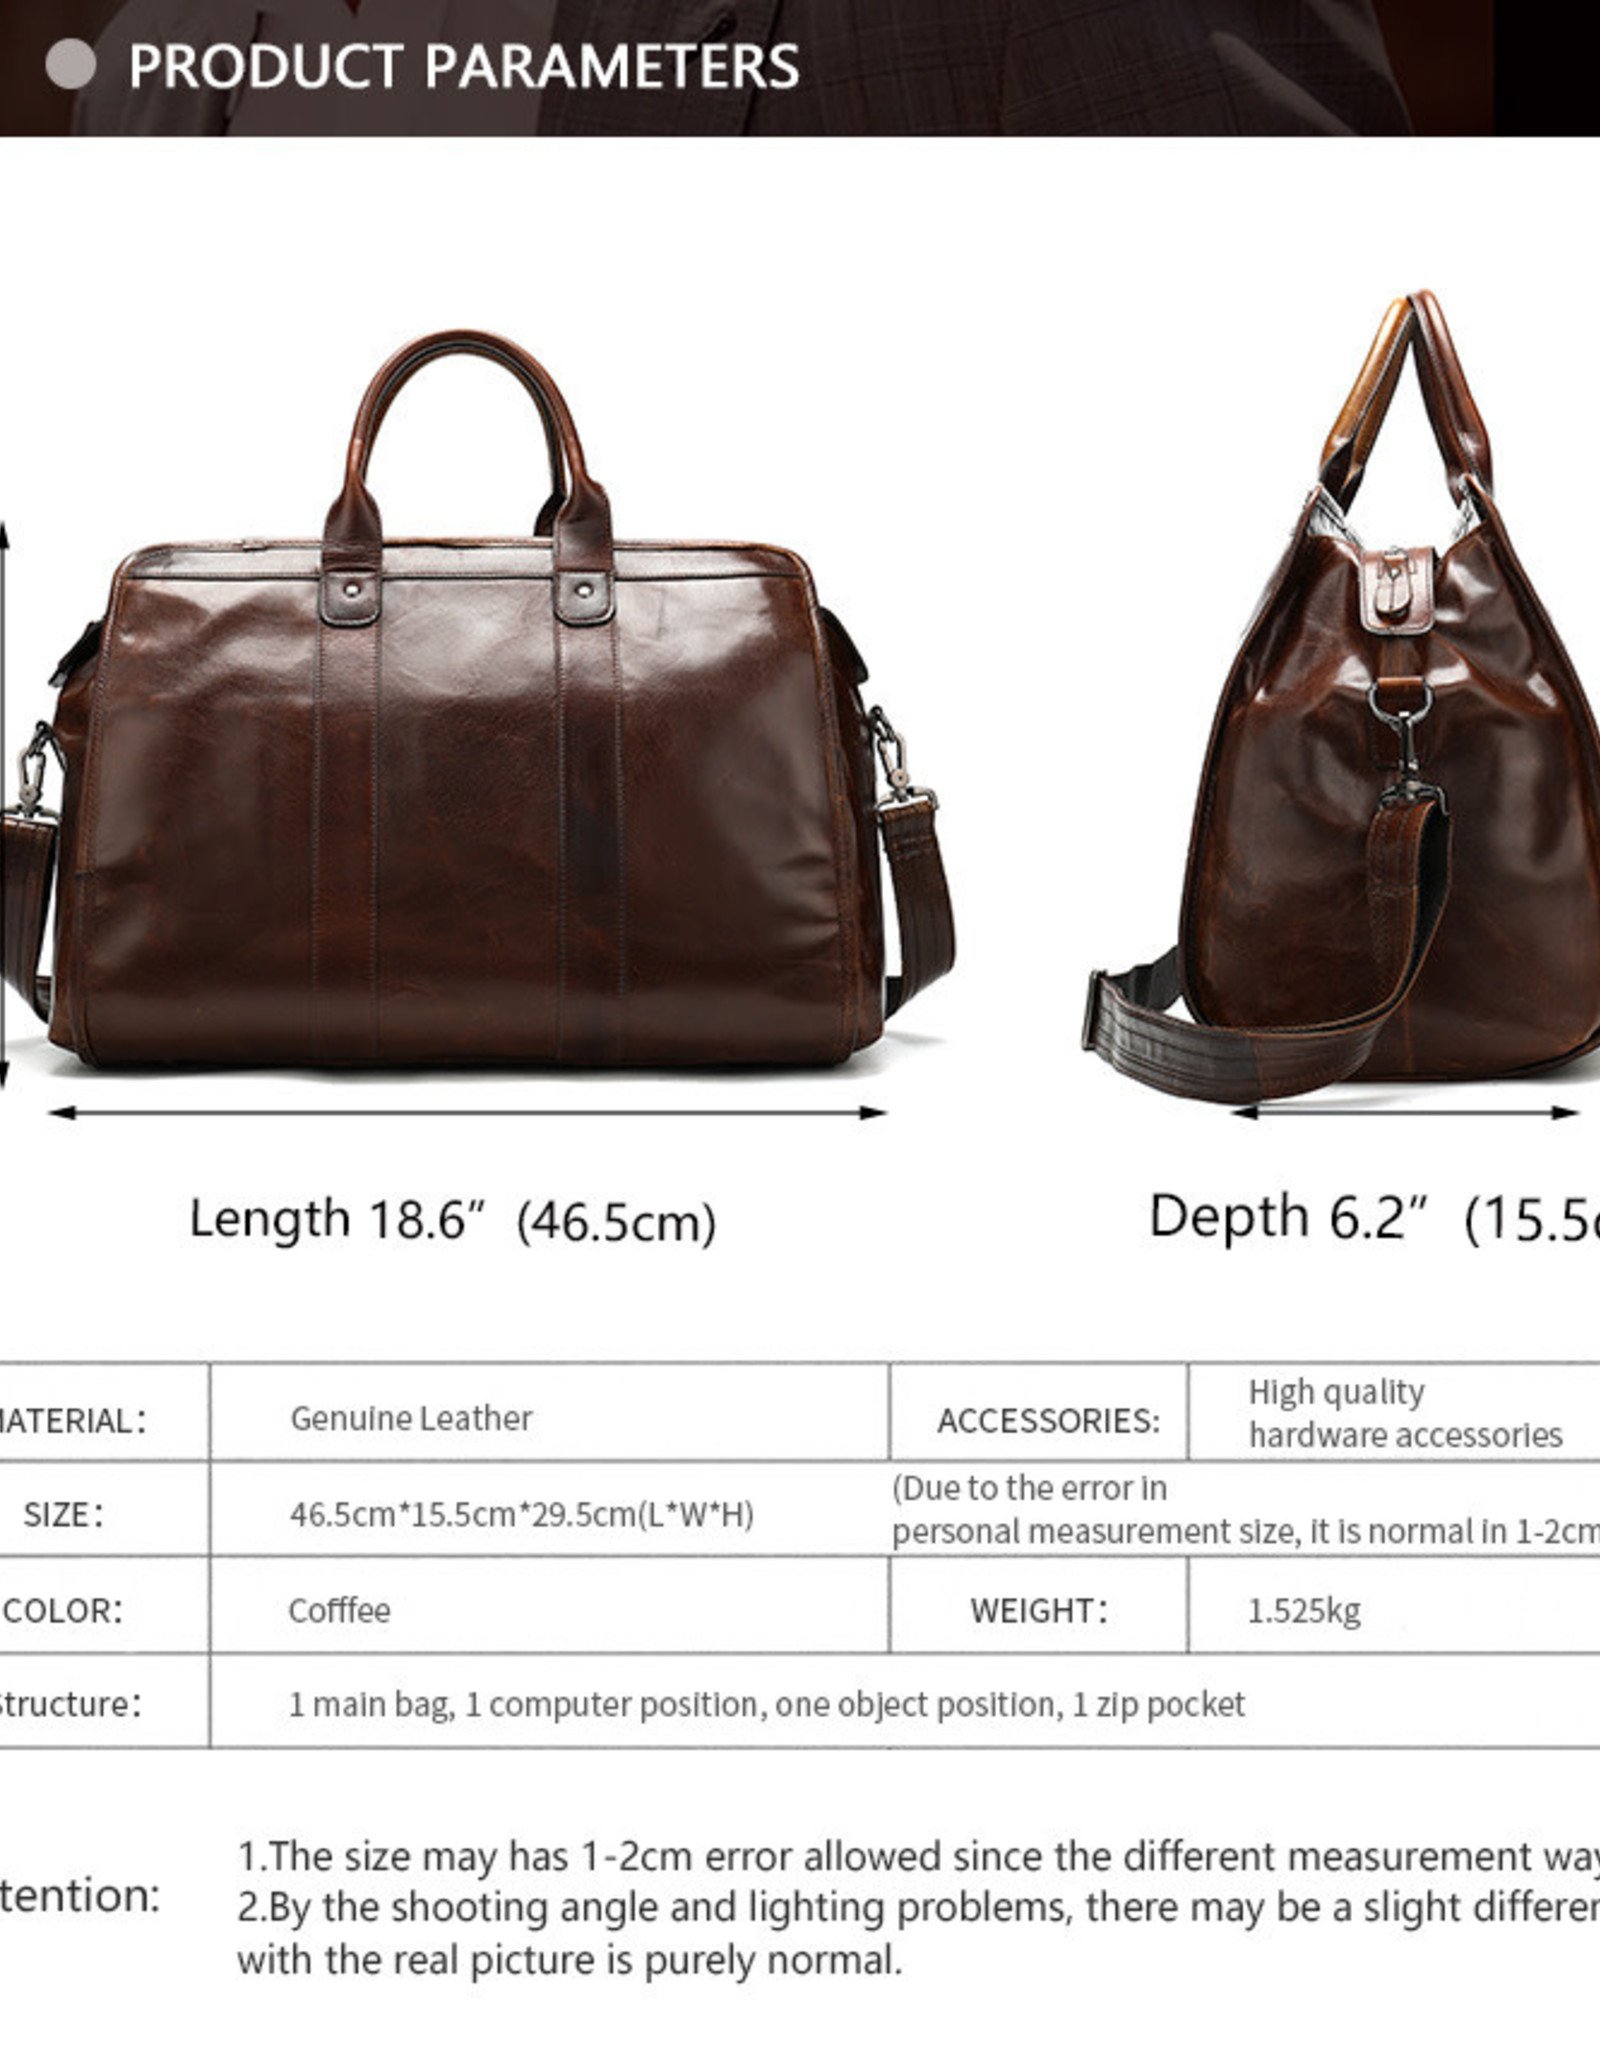 Carson Travel Luggage Bag Genuine Leather - Zuha Trend